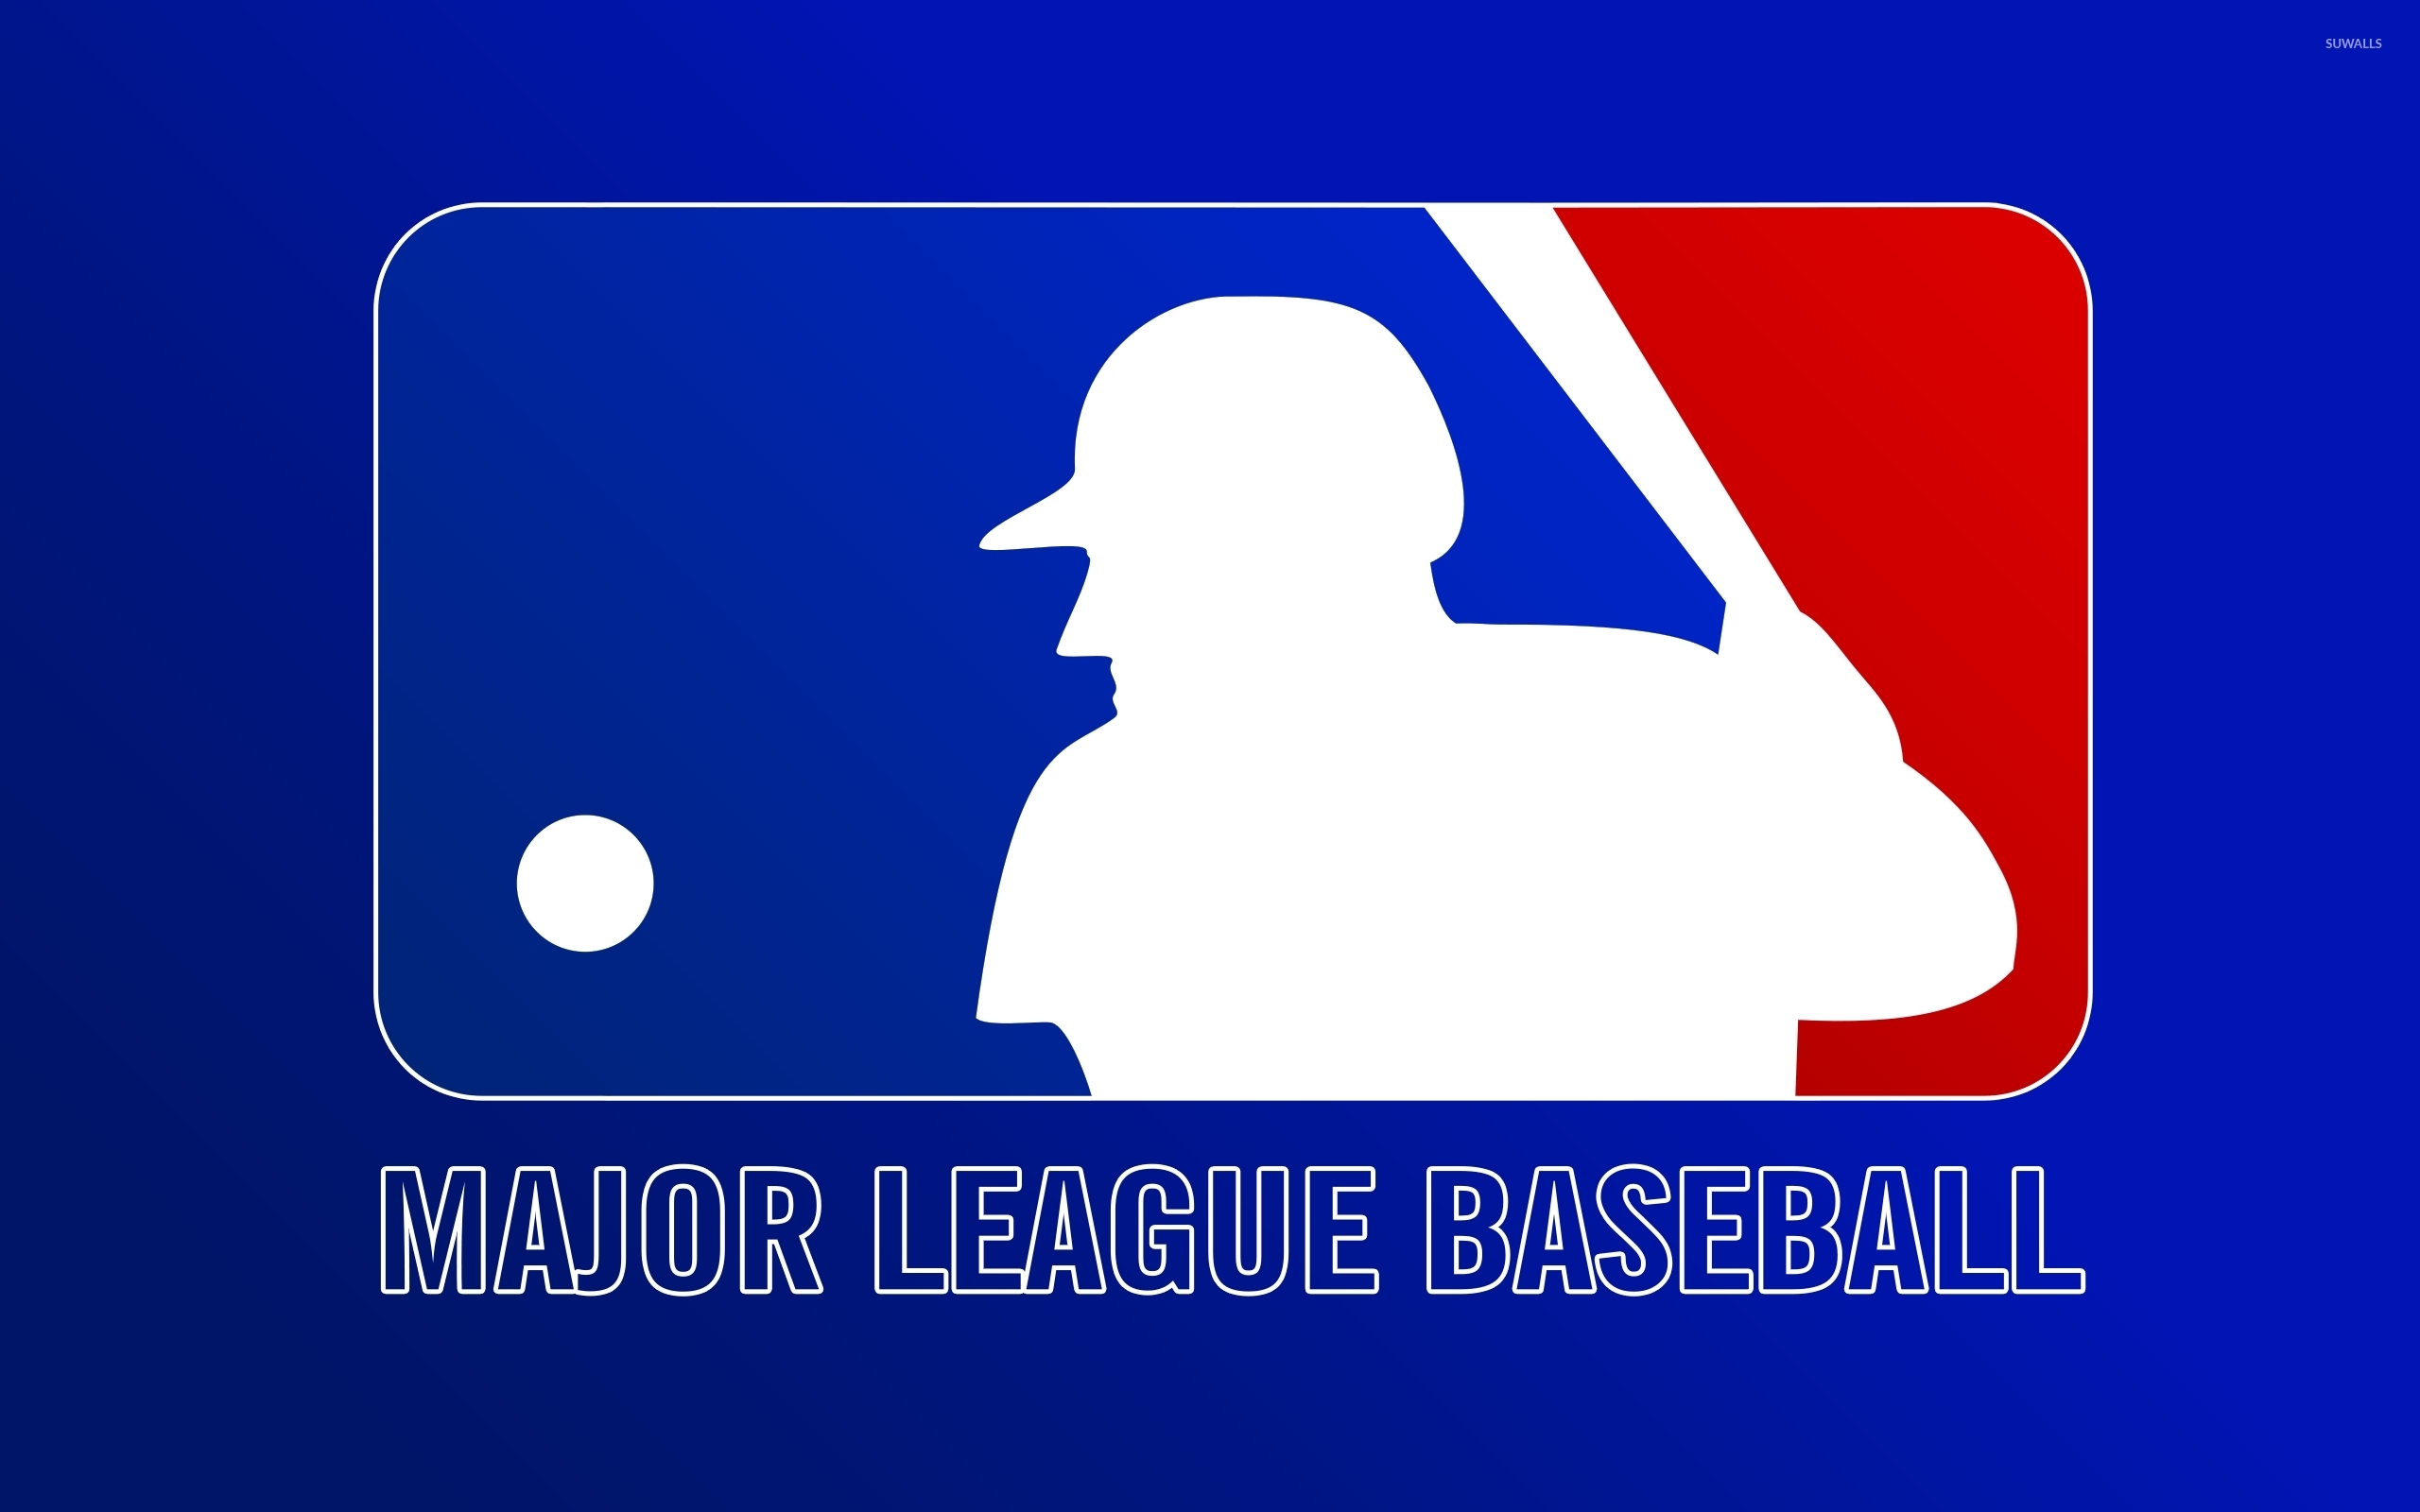 Major League Baseball wallpaper - Sport wallpapers - #43902